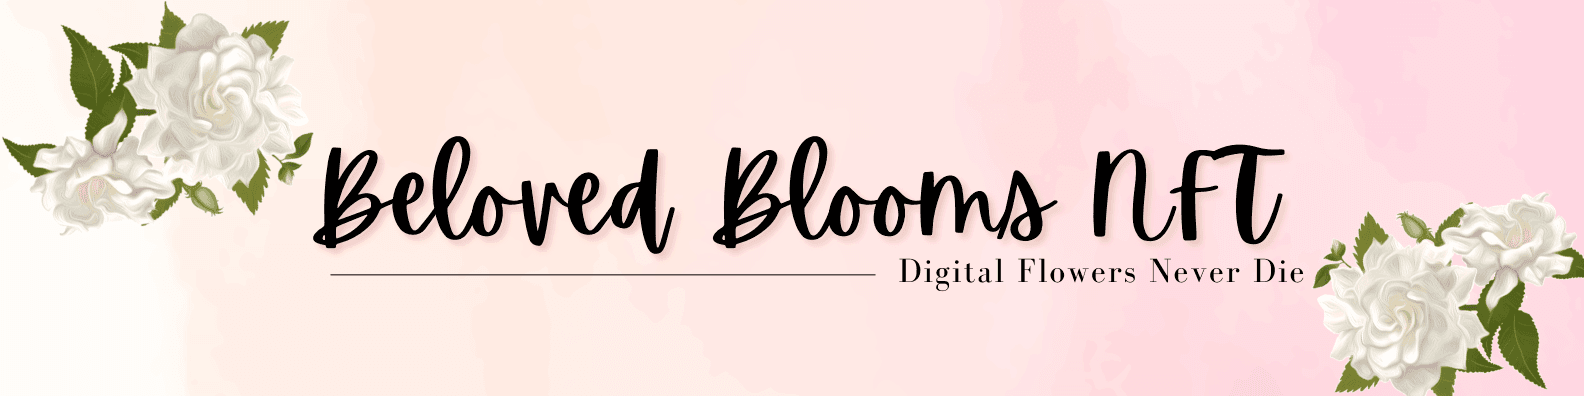 Beloved-Blooms-NFT バナー